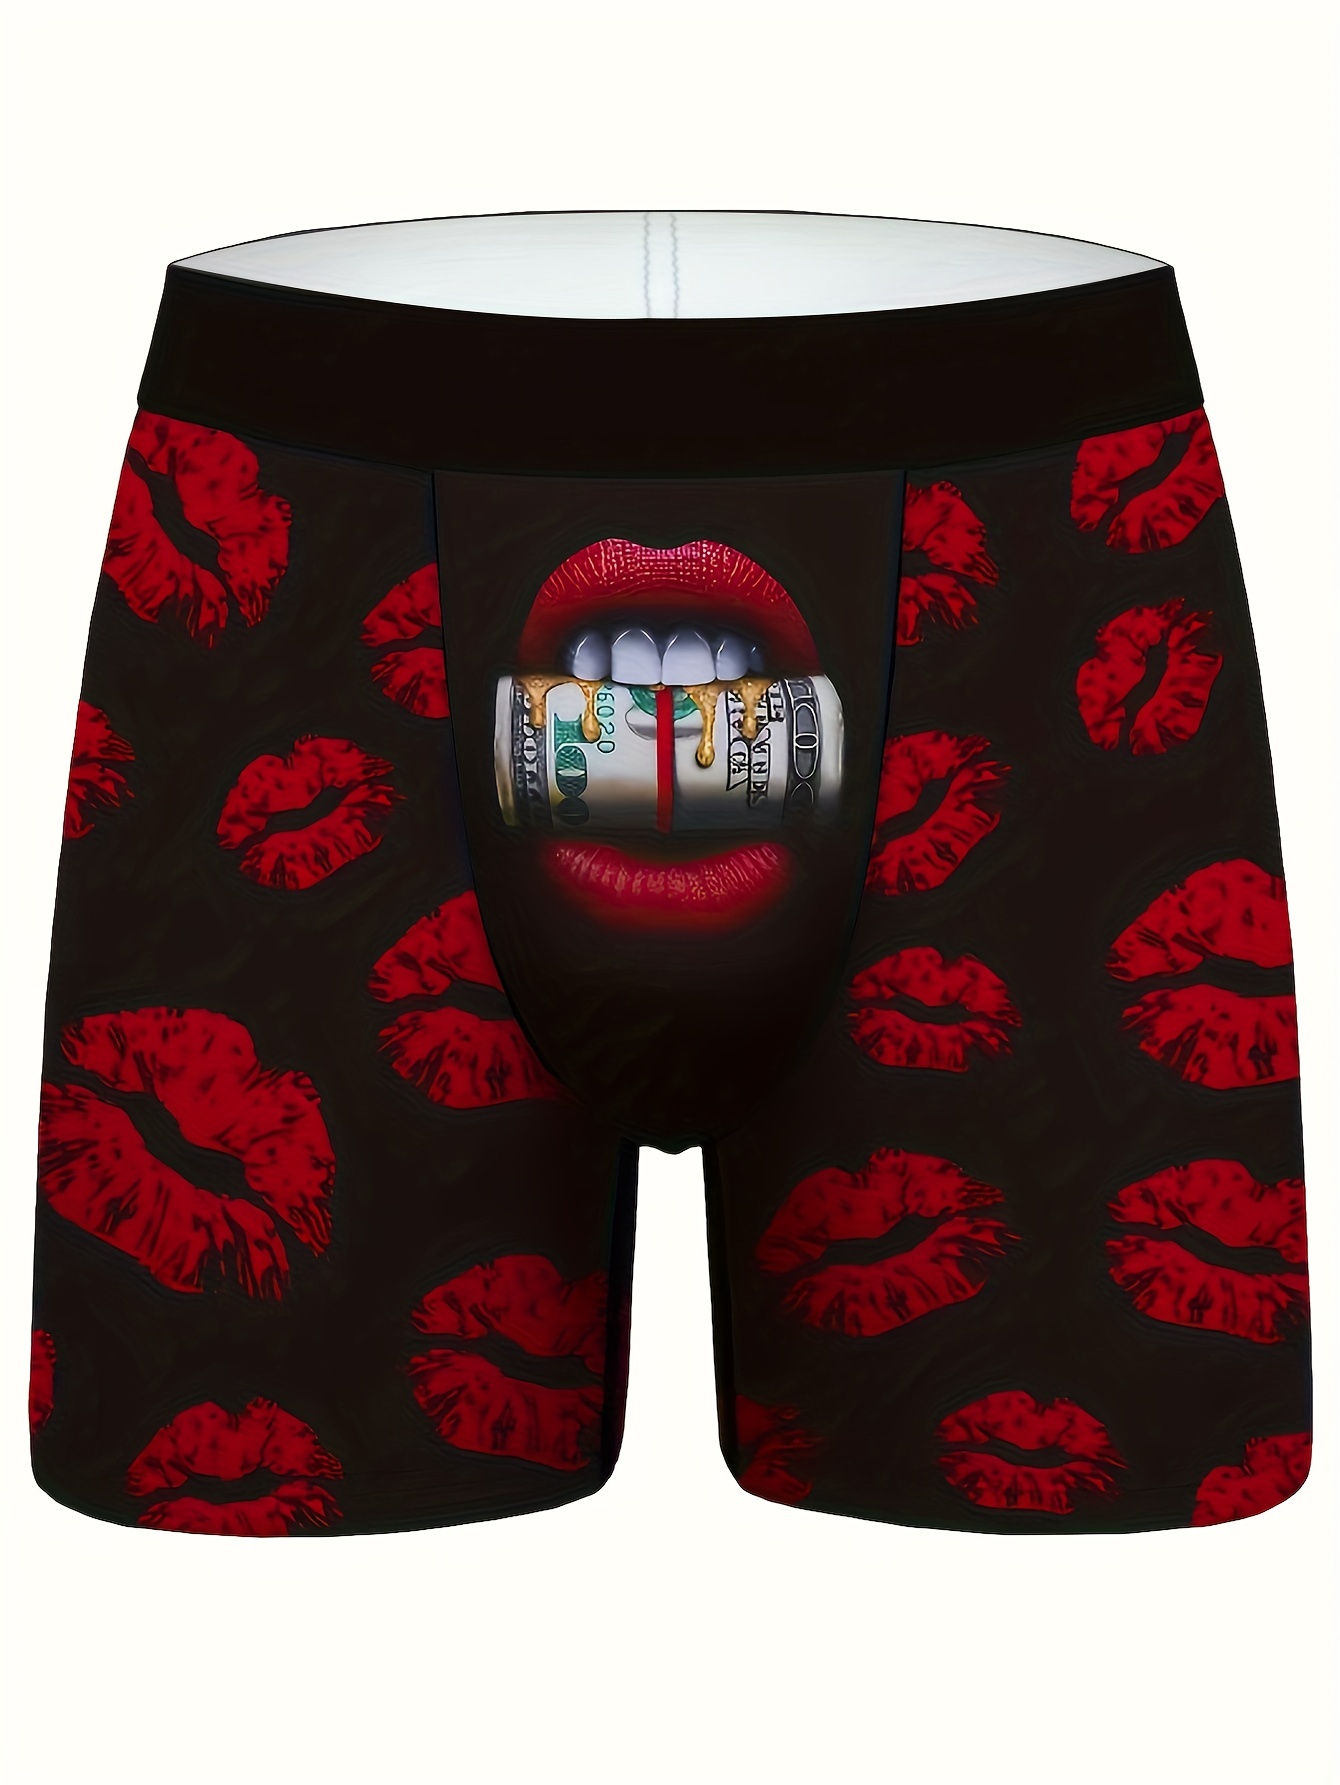 Dollar Underpants Breathbale Panties Male Underwear Print Shorts